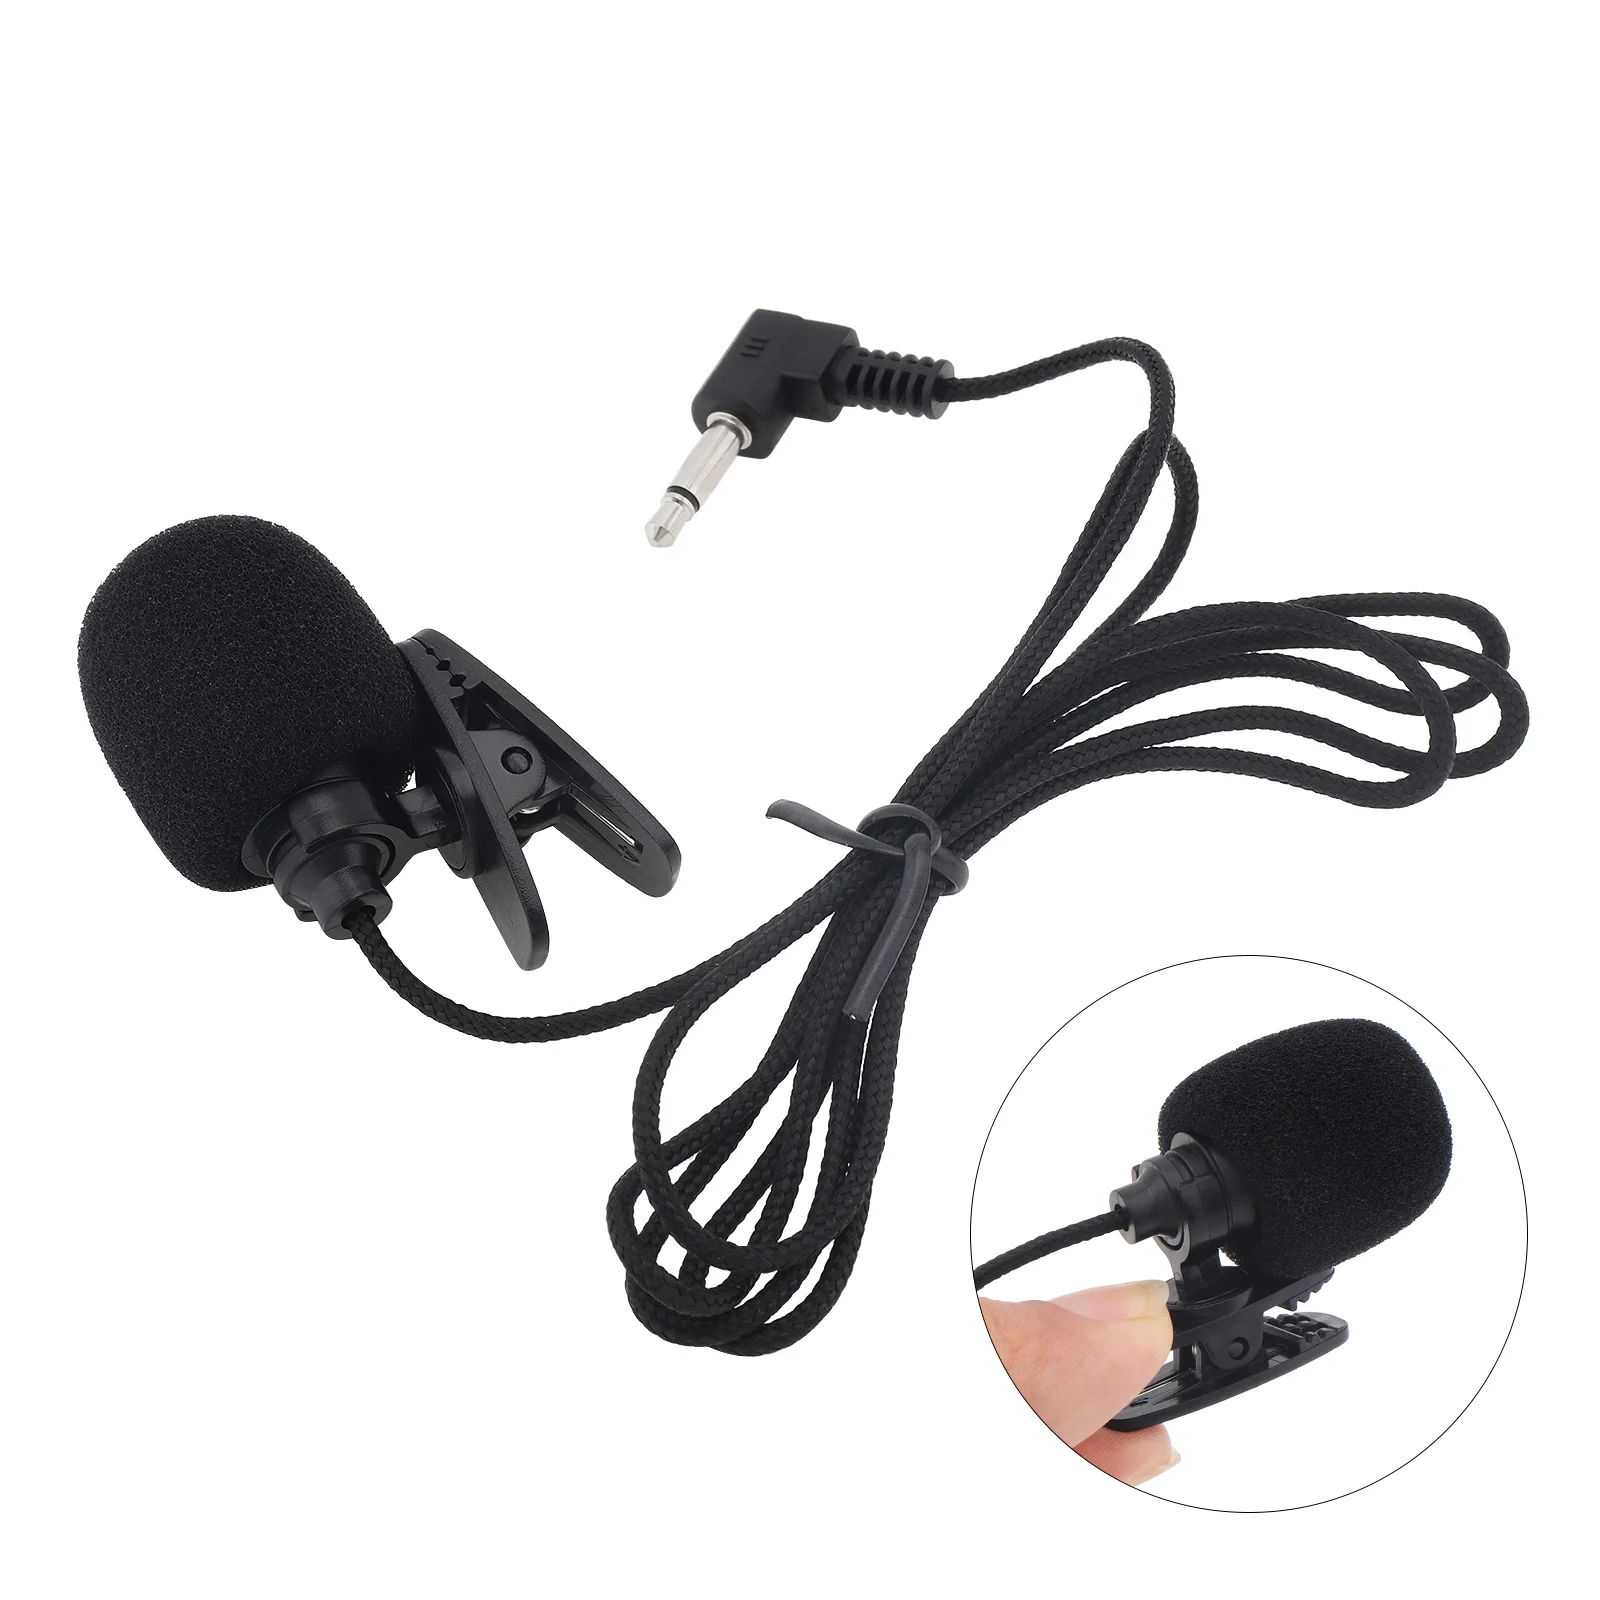 INSTEN® Mini Microphone Micro Universel Jack 3,5mm avec Clip